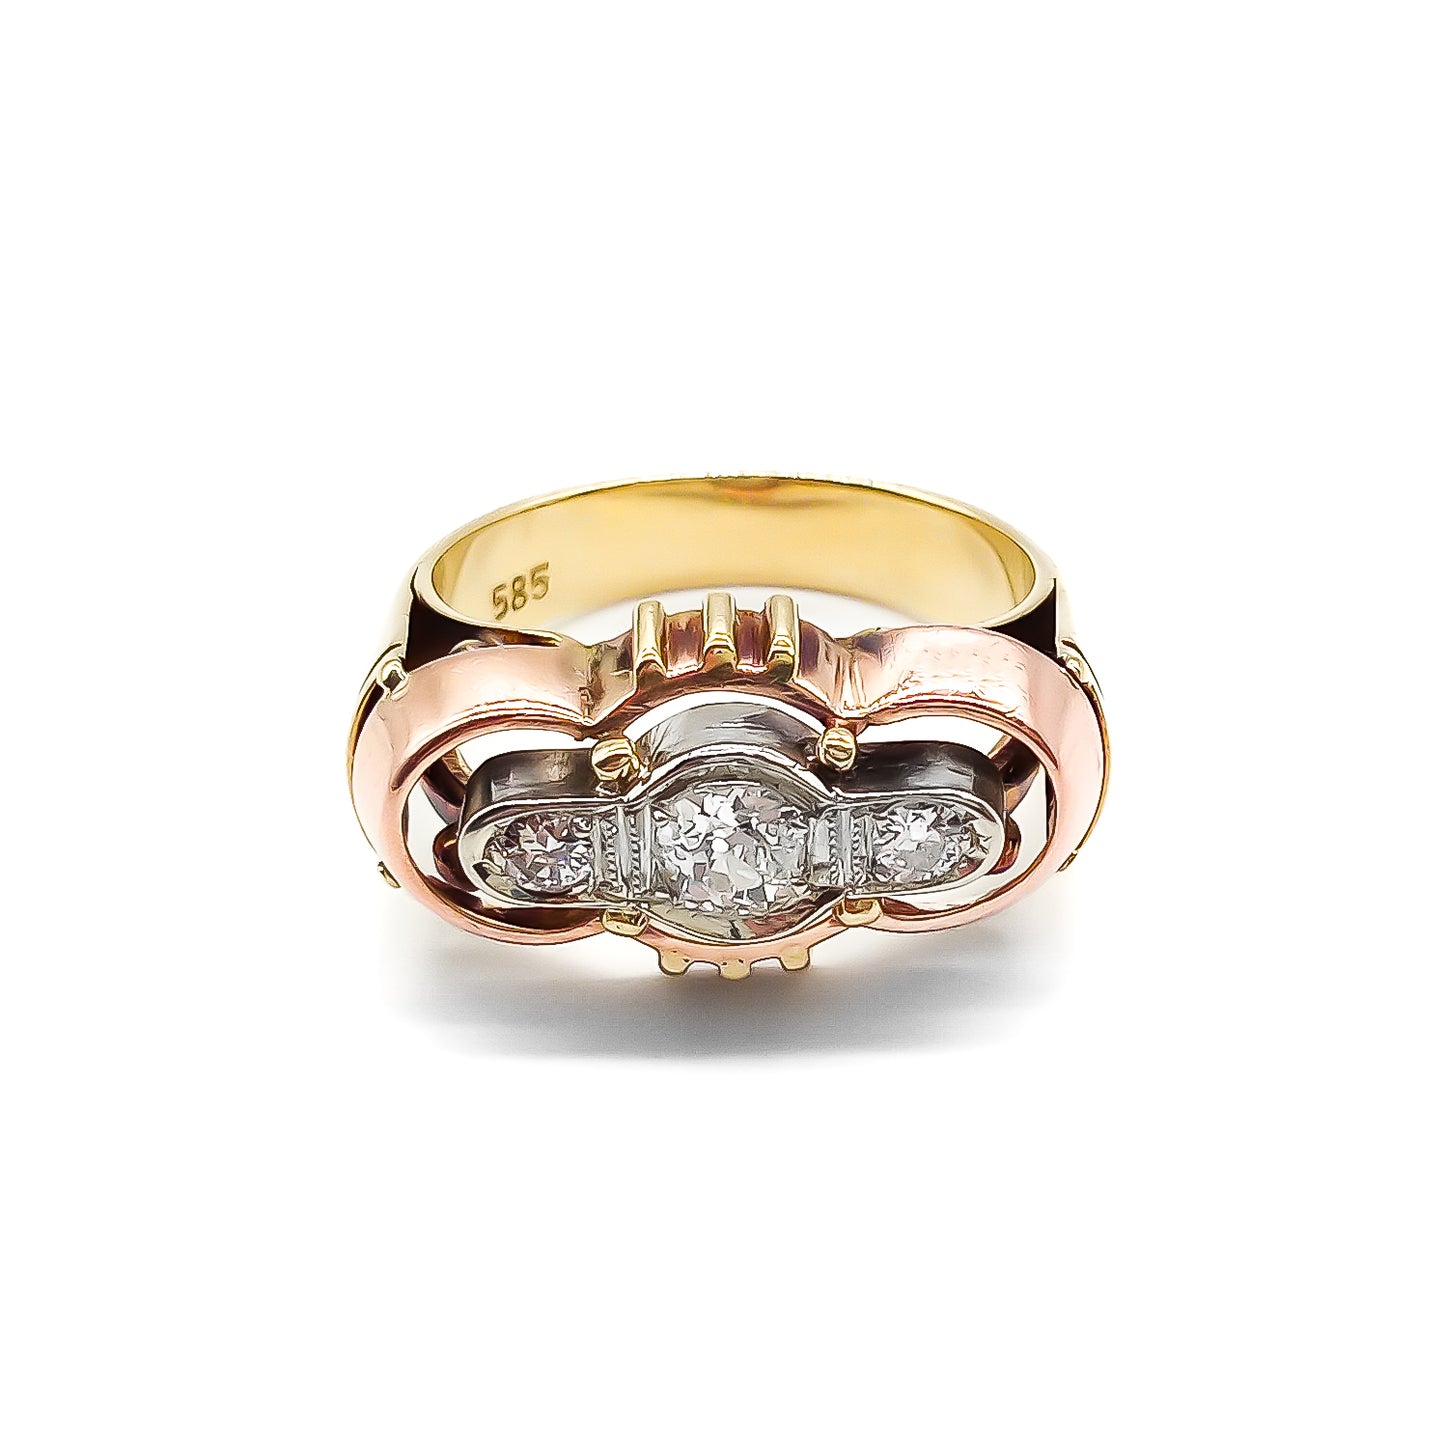 14ct Gold Art Deco Diamond Ring